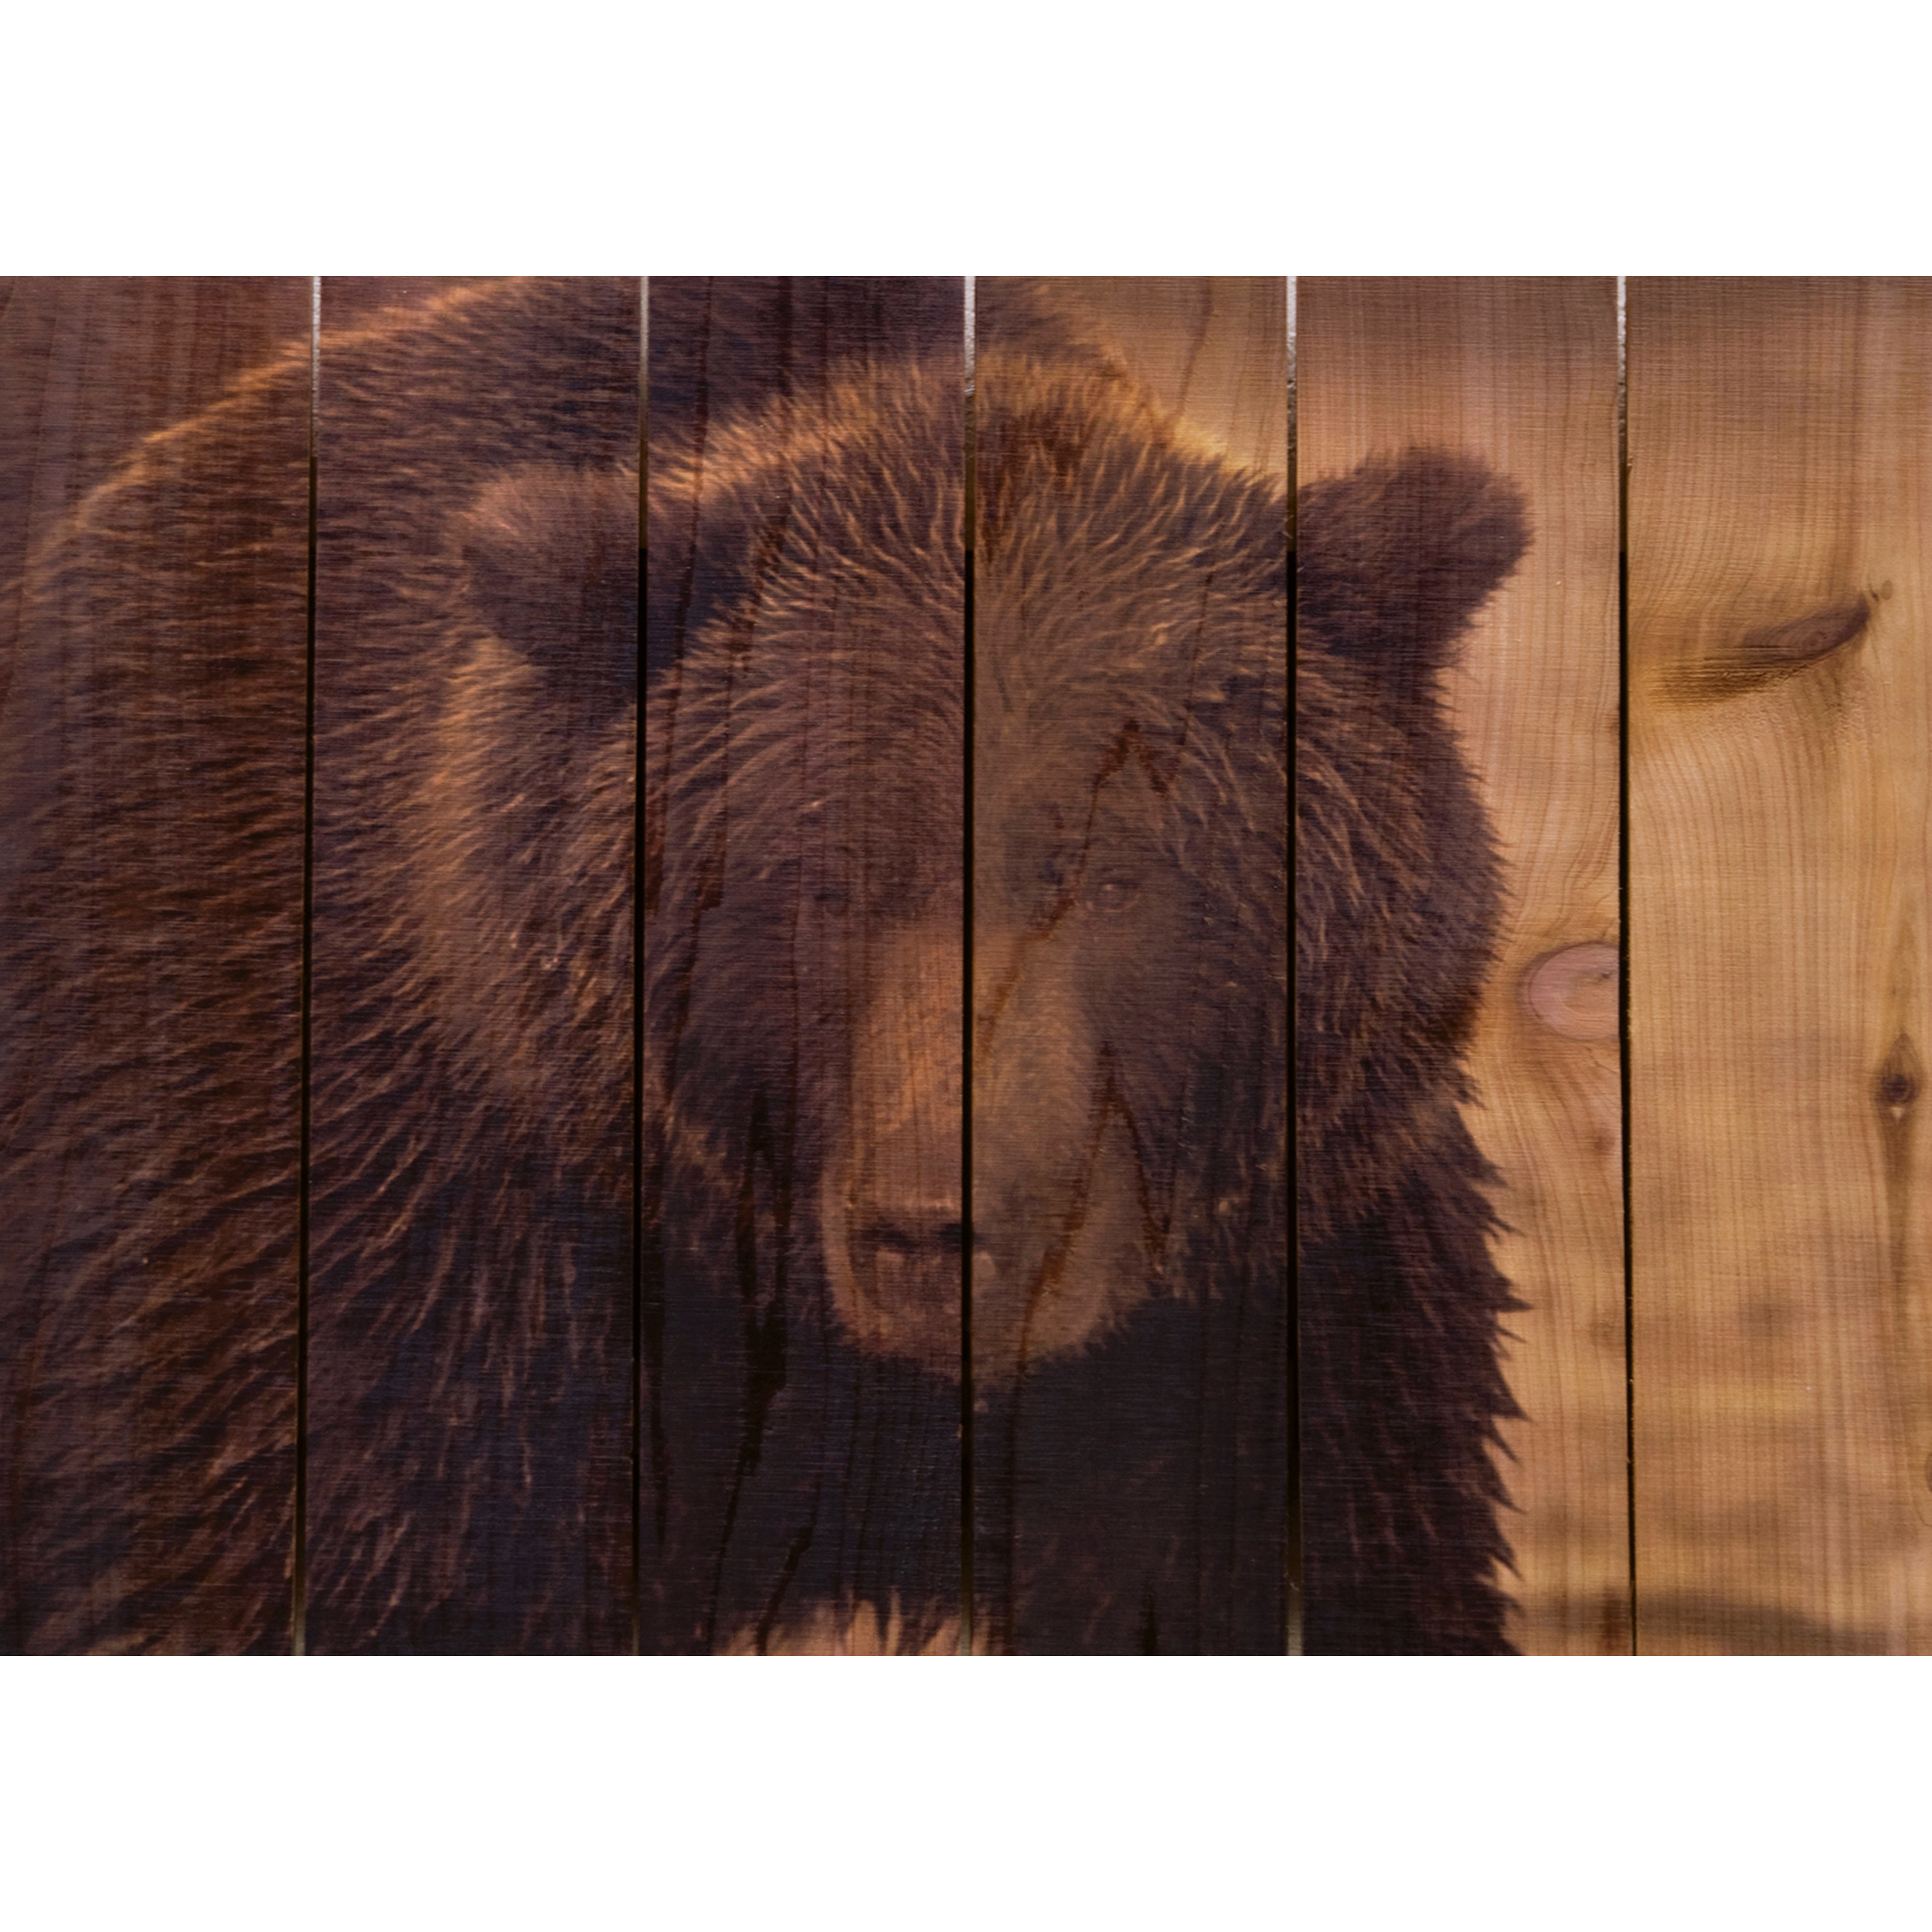 Daydream Gizaun Cedar Wall Art, Big Bear, 22.5" W X 16" H